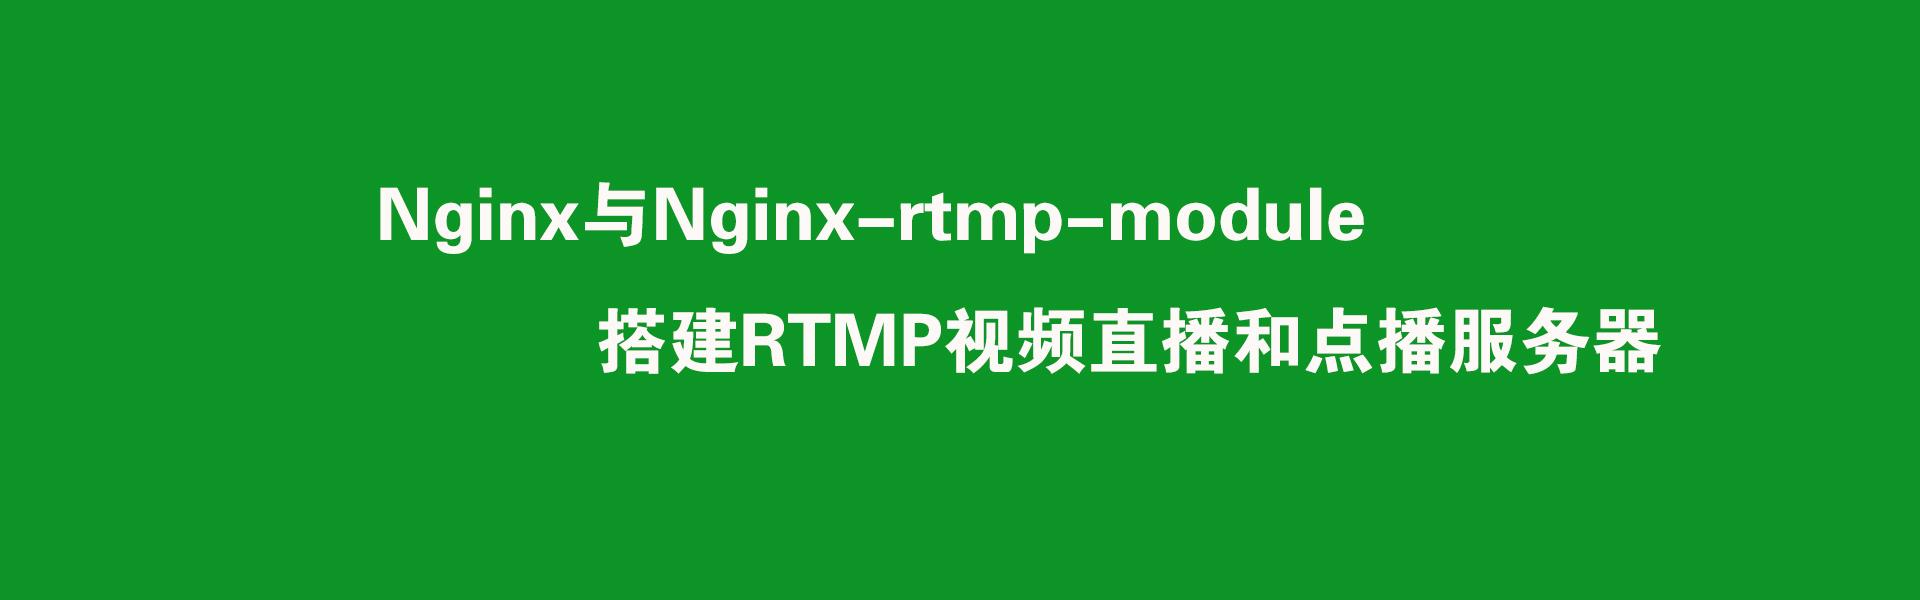 Nginx与Nginx-rtmp-module搭建RTMP视频直播和点播服务器